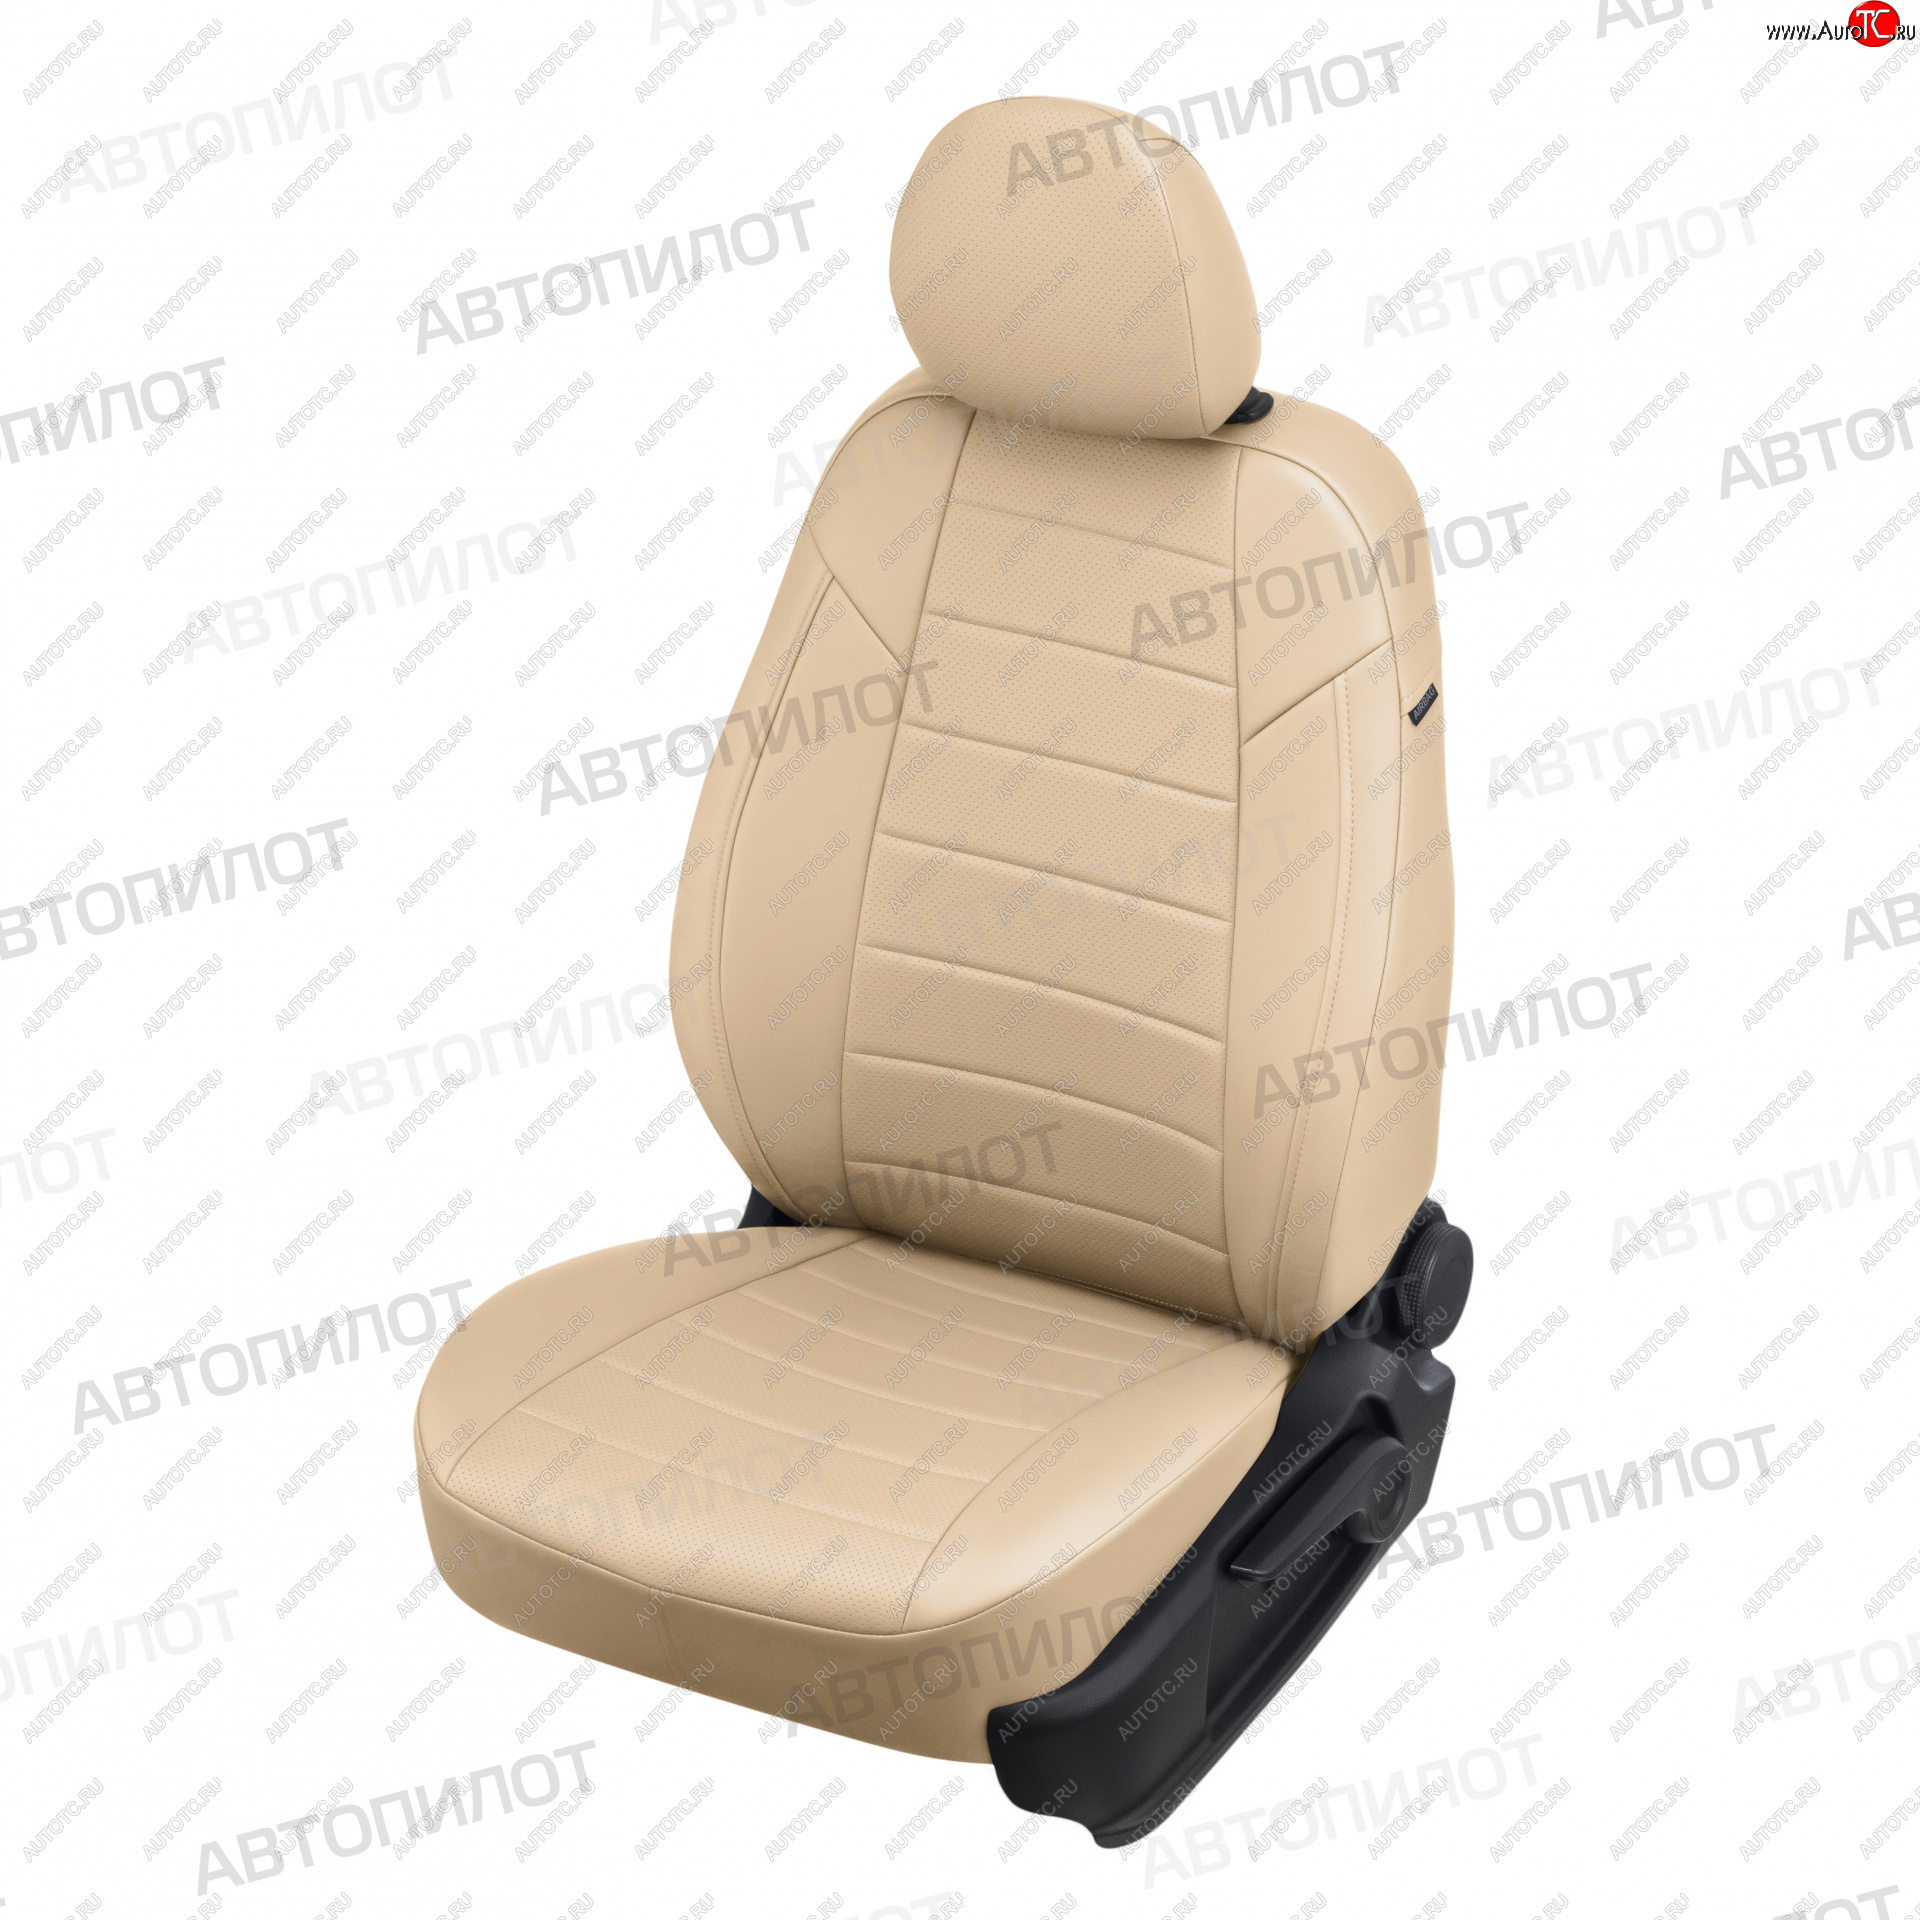 13 449 р. Чехлы сидений (экокожа) Автопилот  Hyundai Sonata  NF (2004-2010) (бежевый)